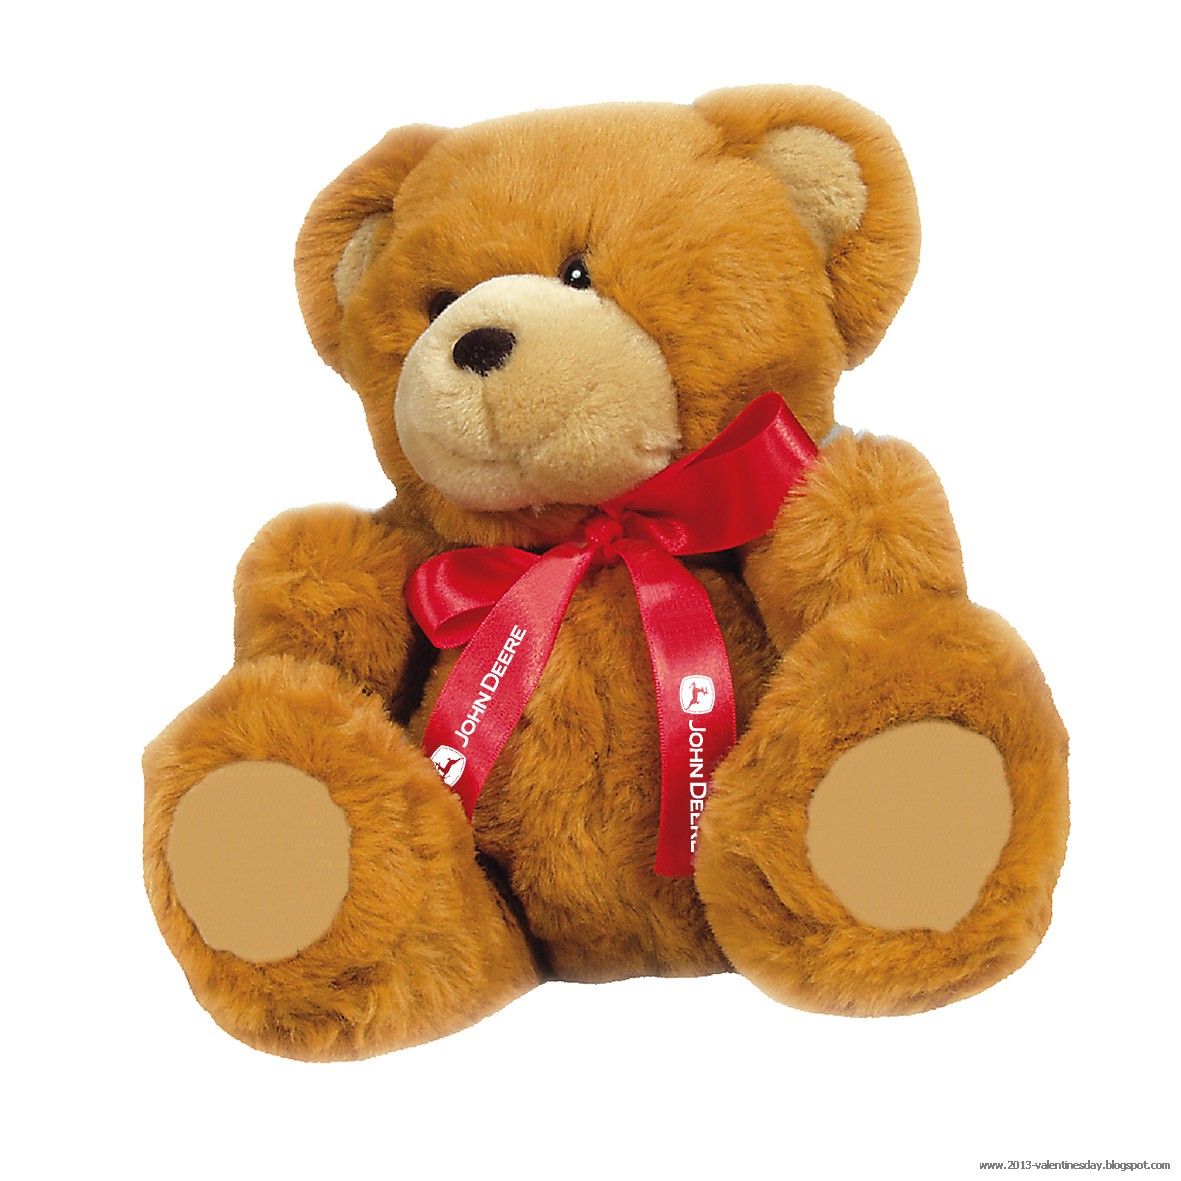 Valentines day Teddy bear gift ideas .wallpaperafari.com